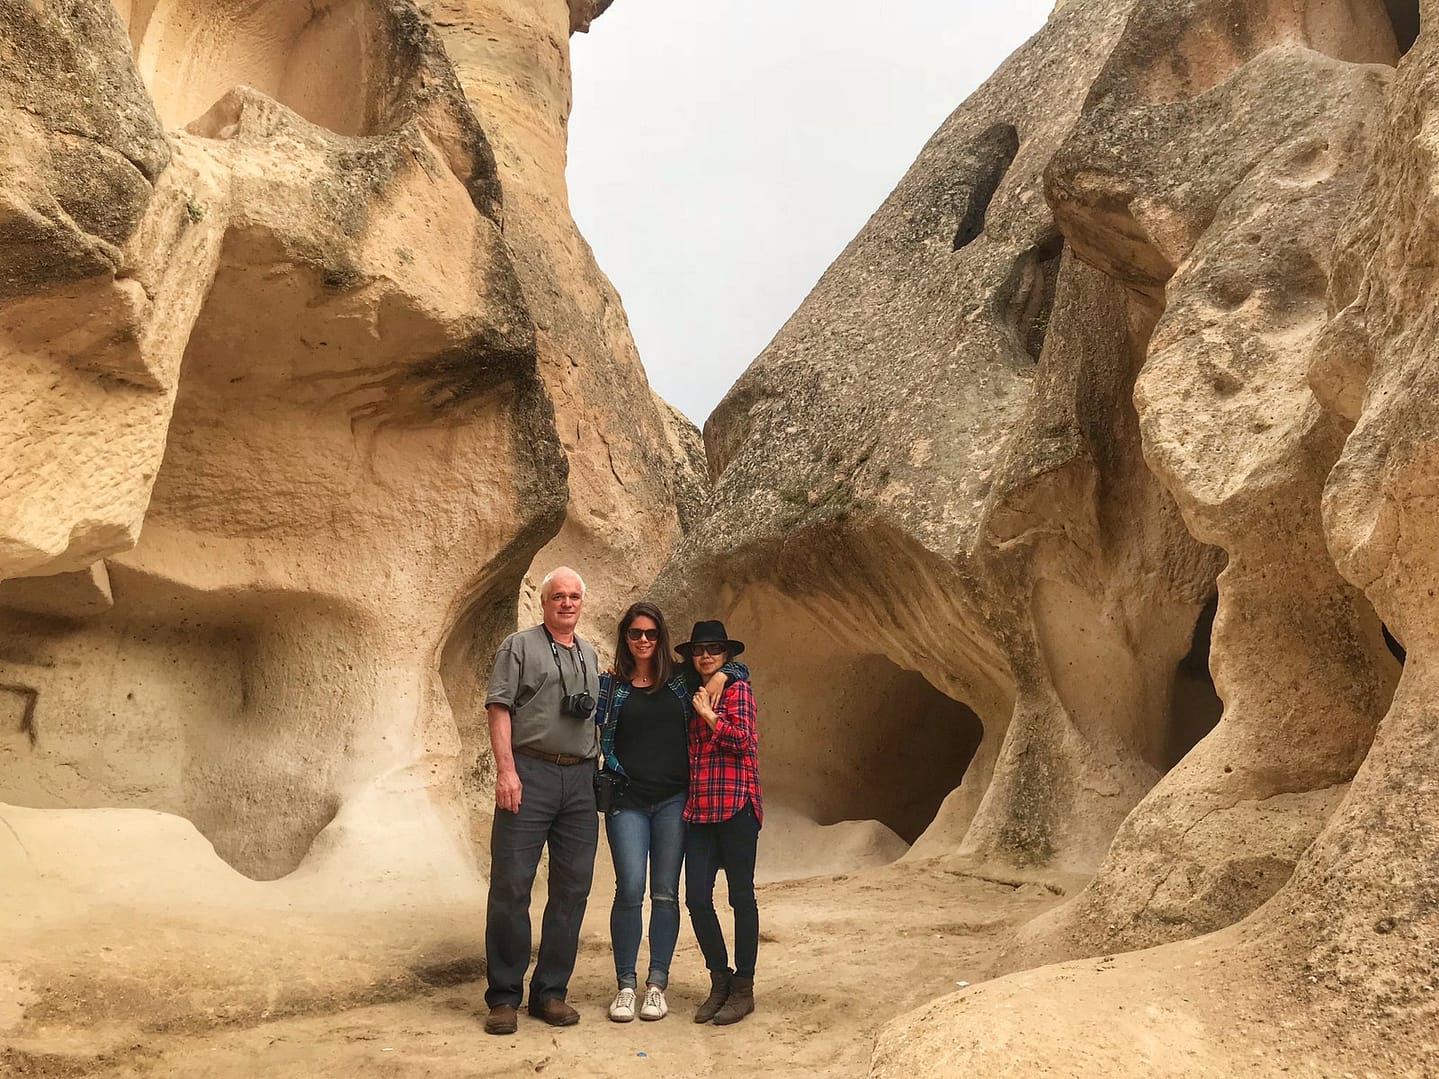 Cappadocia - Nicola and parents